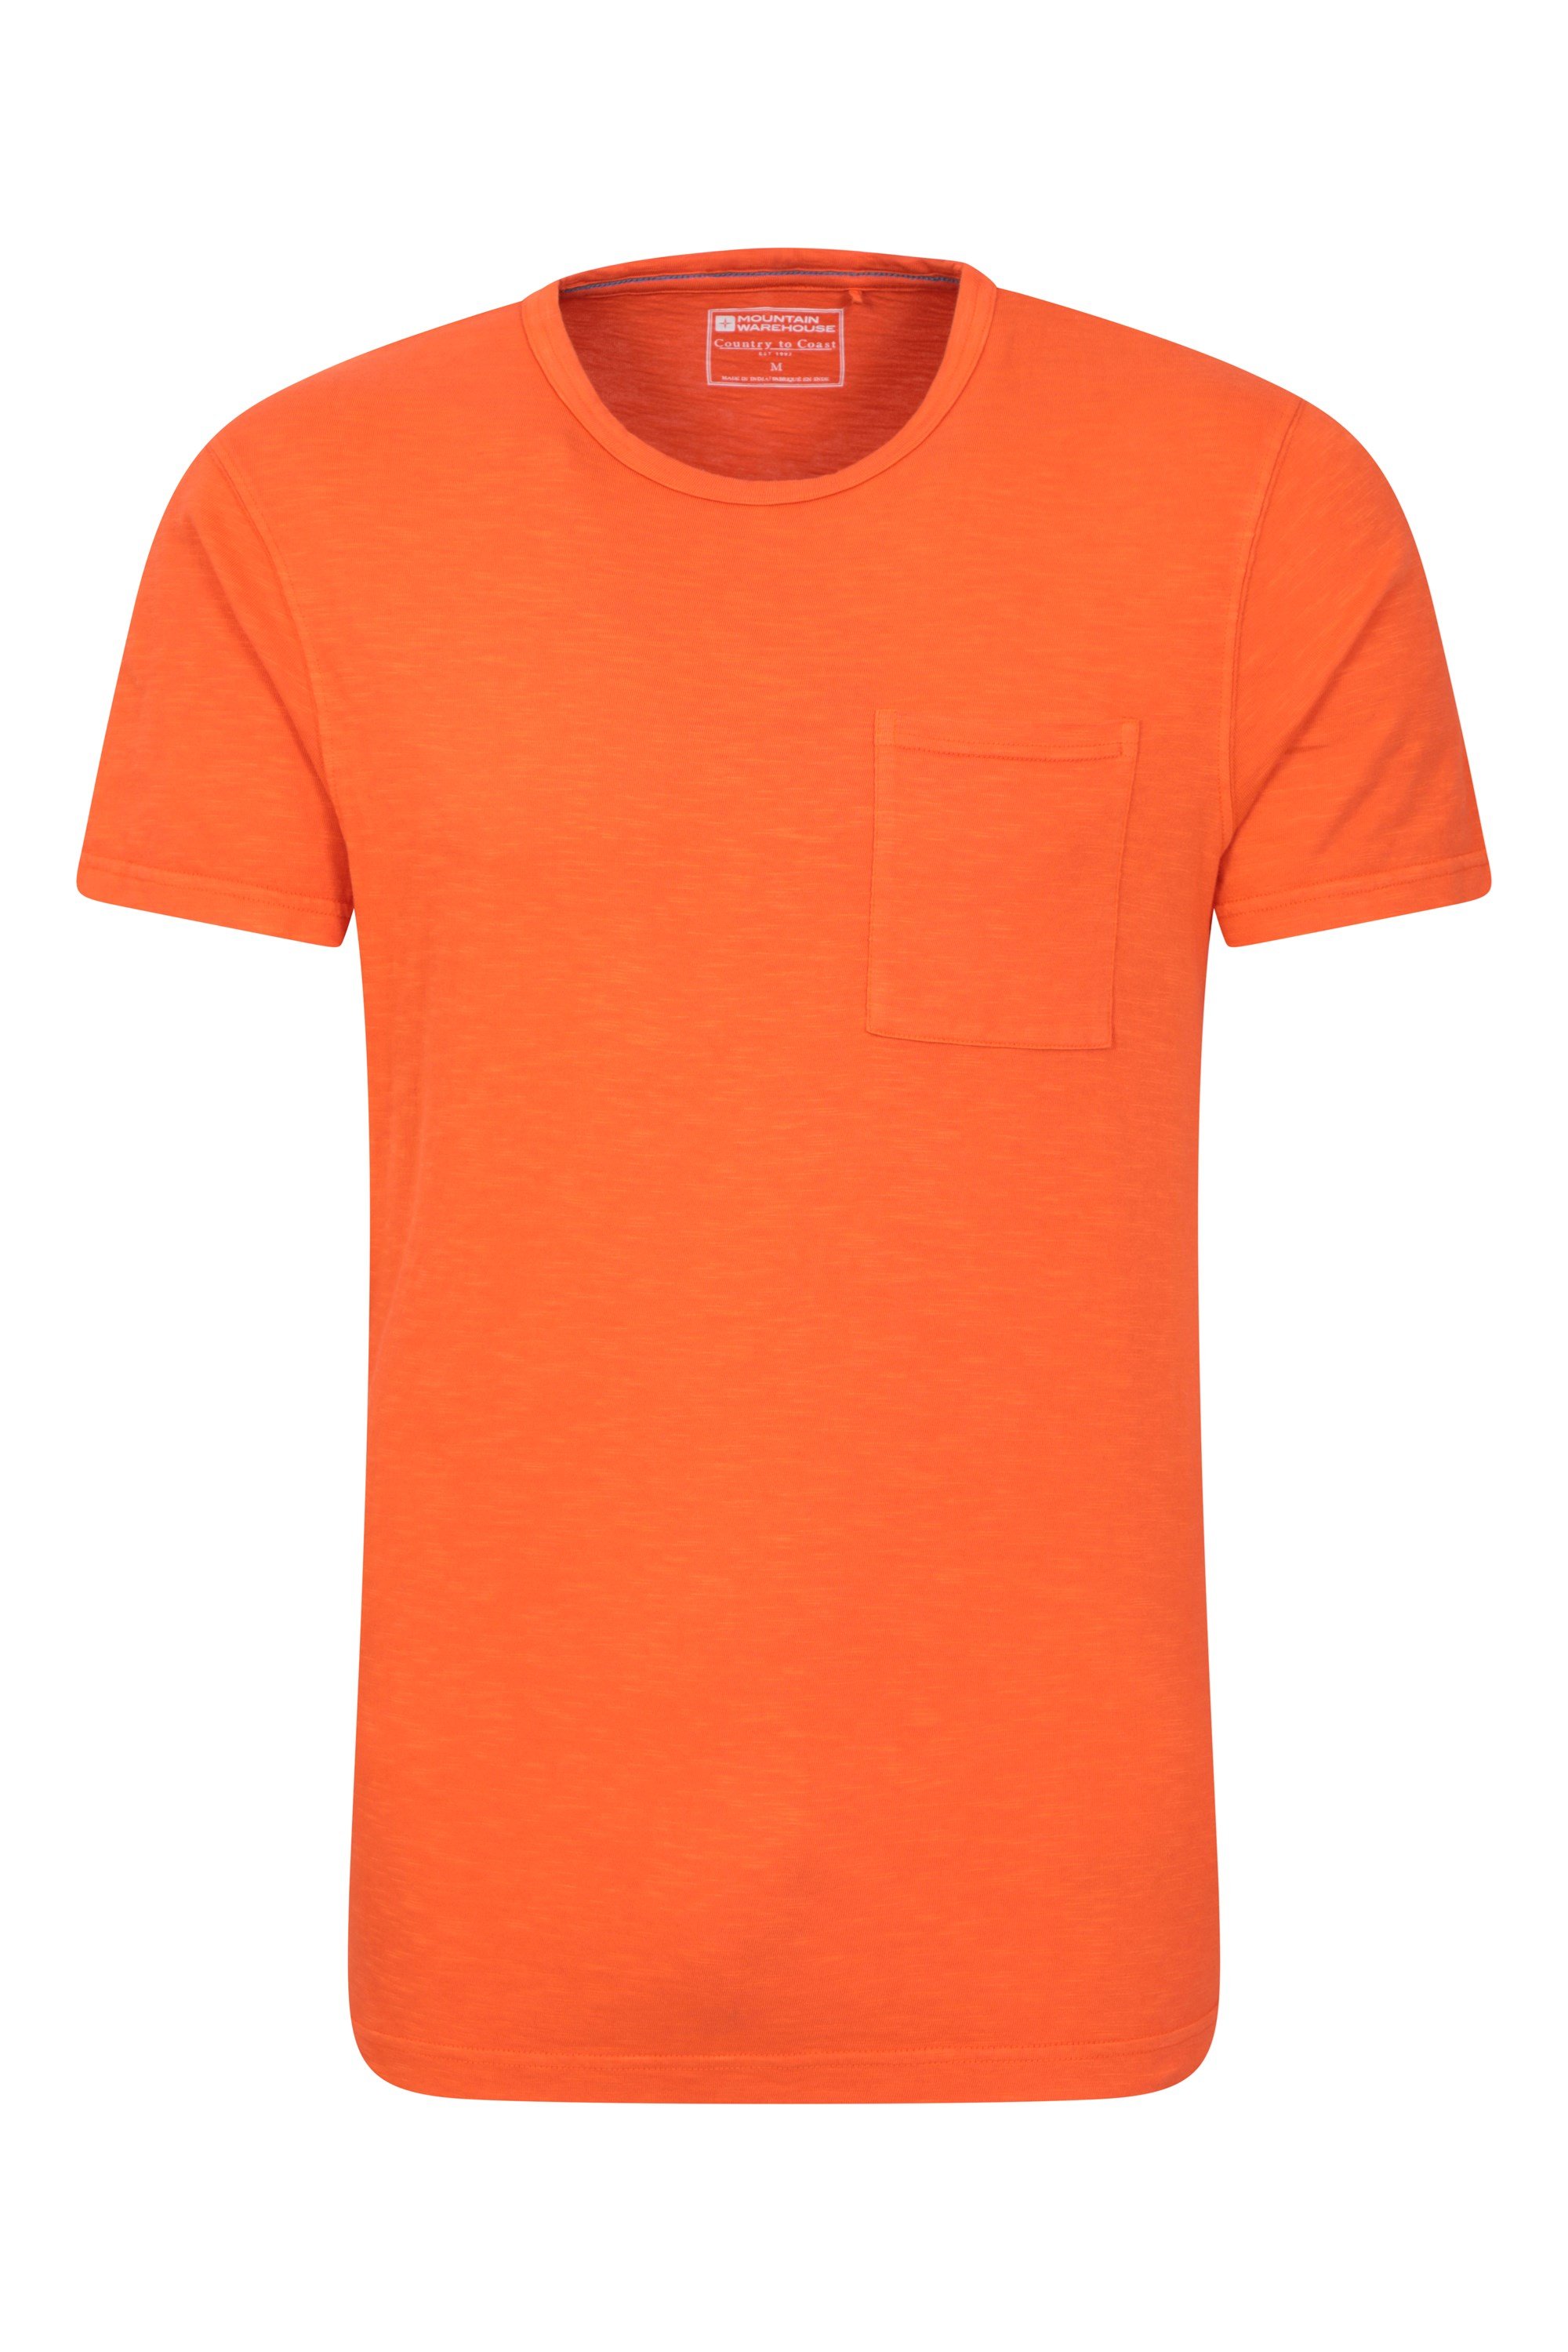 Fescue Mens Pocket T-shirt - Orange